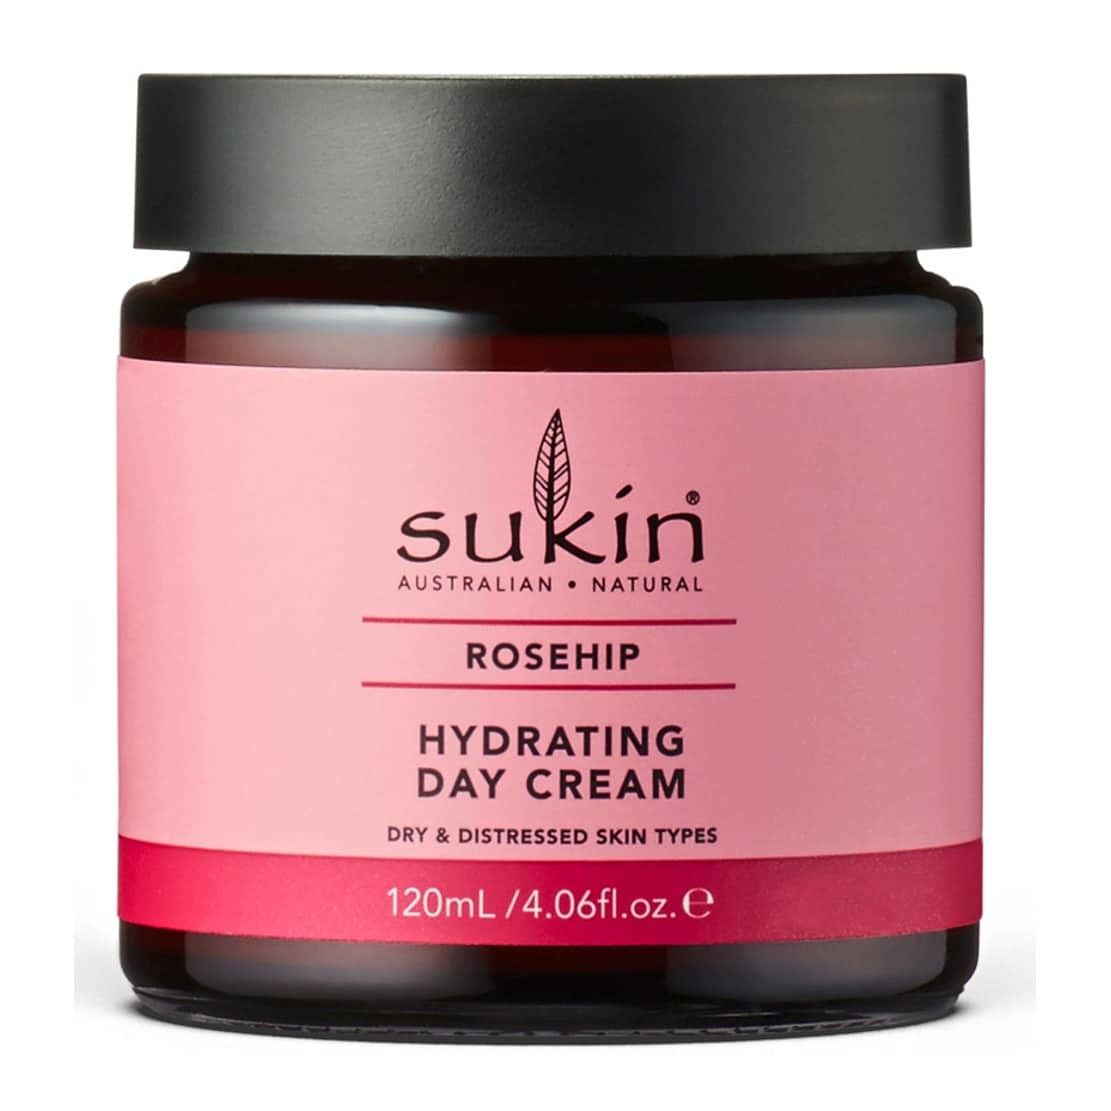 Sukin Rosehip Hydrating Day Cream, 120 ml, Pack of 1 